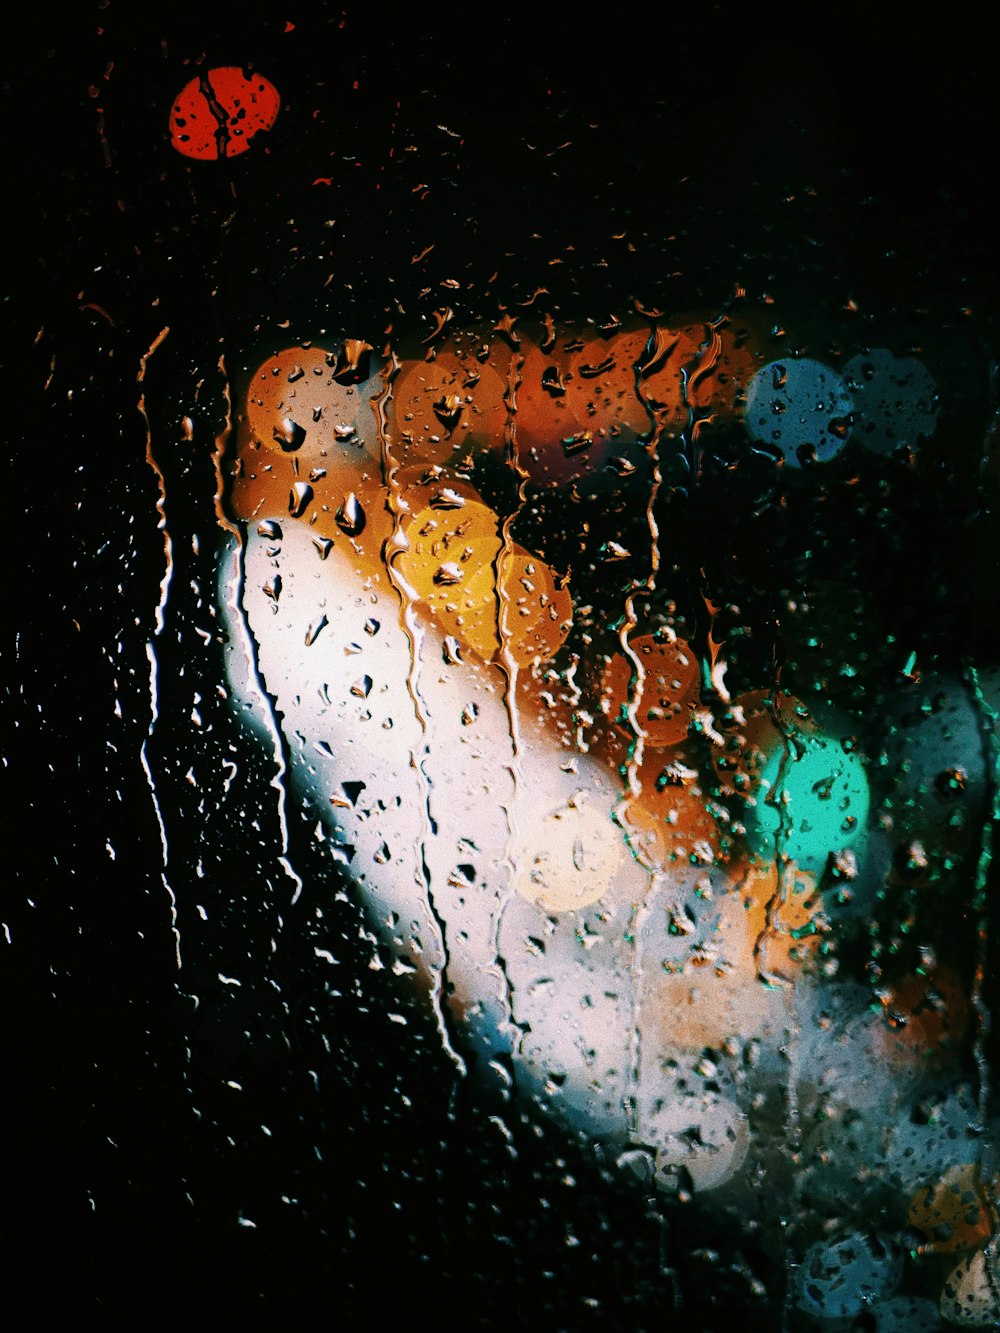 a traffic light seen through a rain covered window